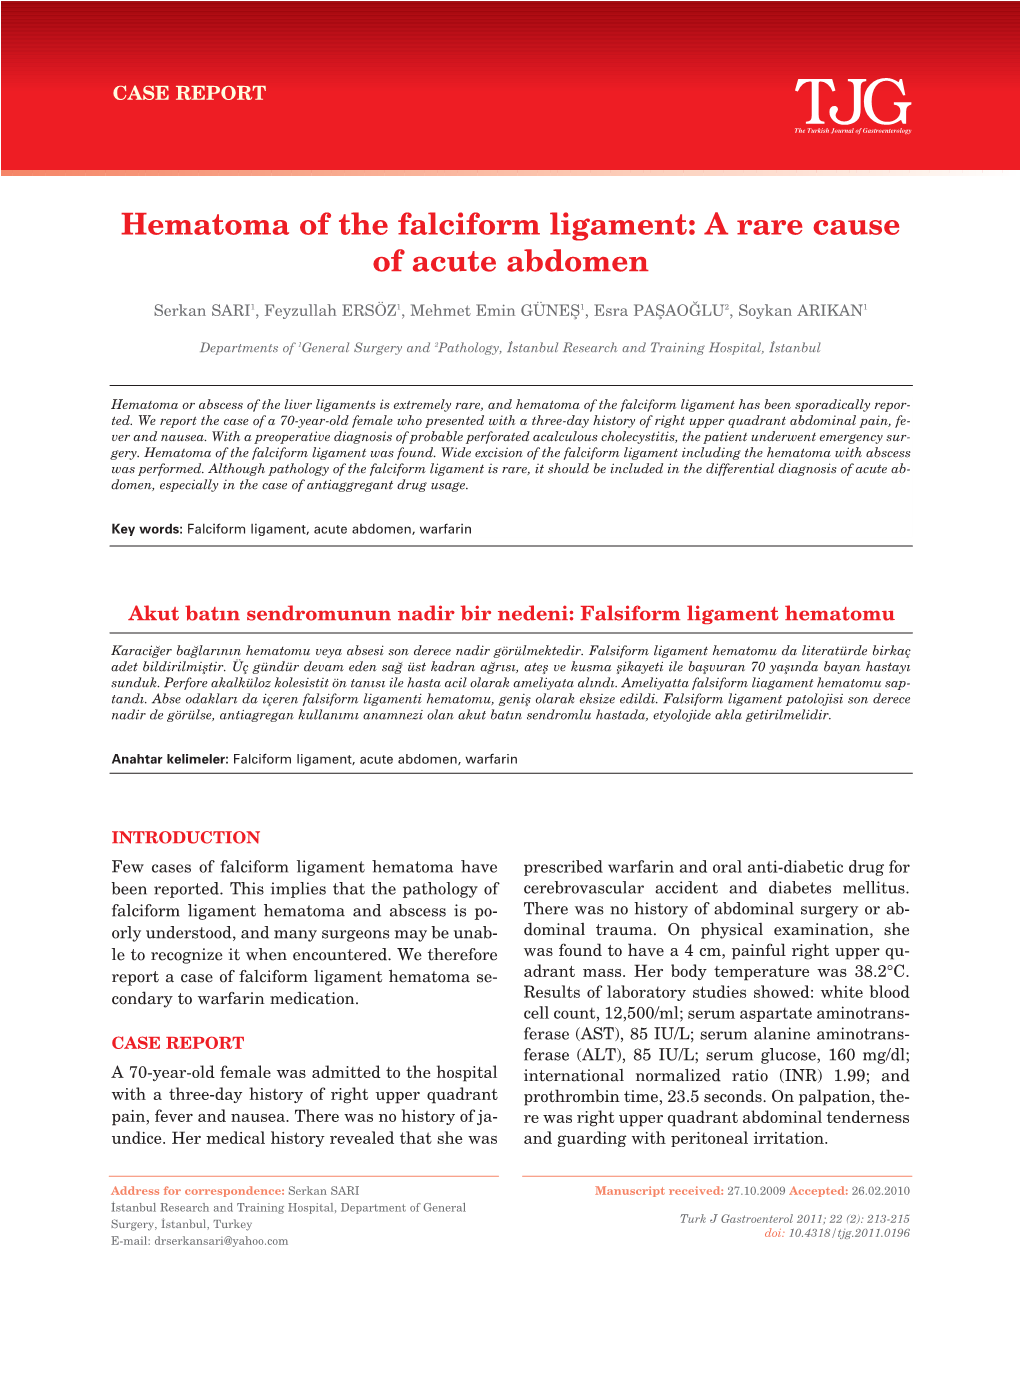 Hematoma of the Falciform Ligament: a Rare Cause of Acute Abdomen